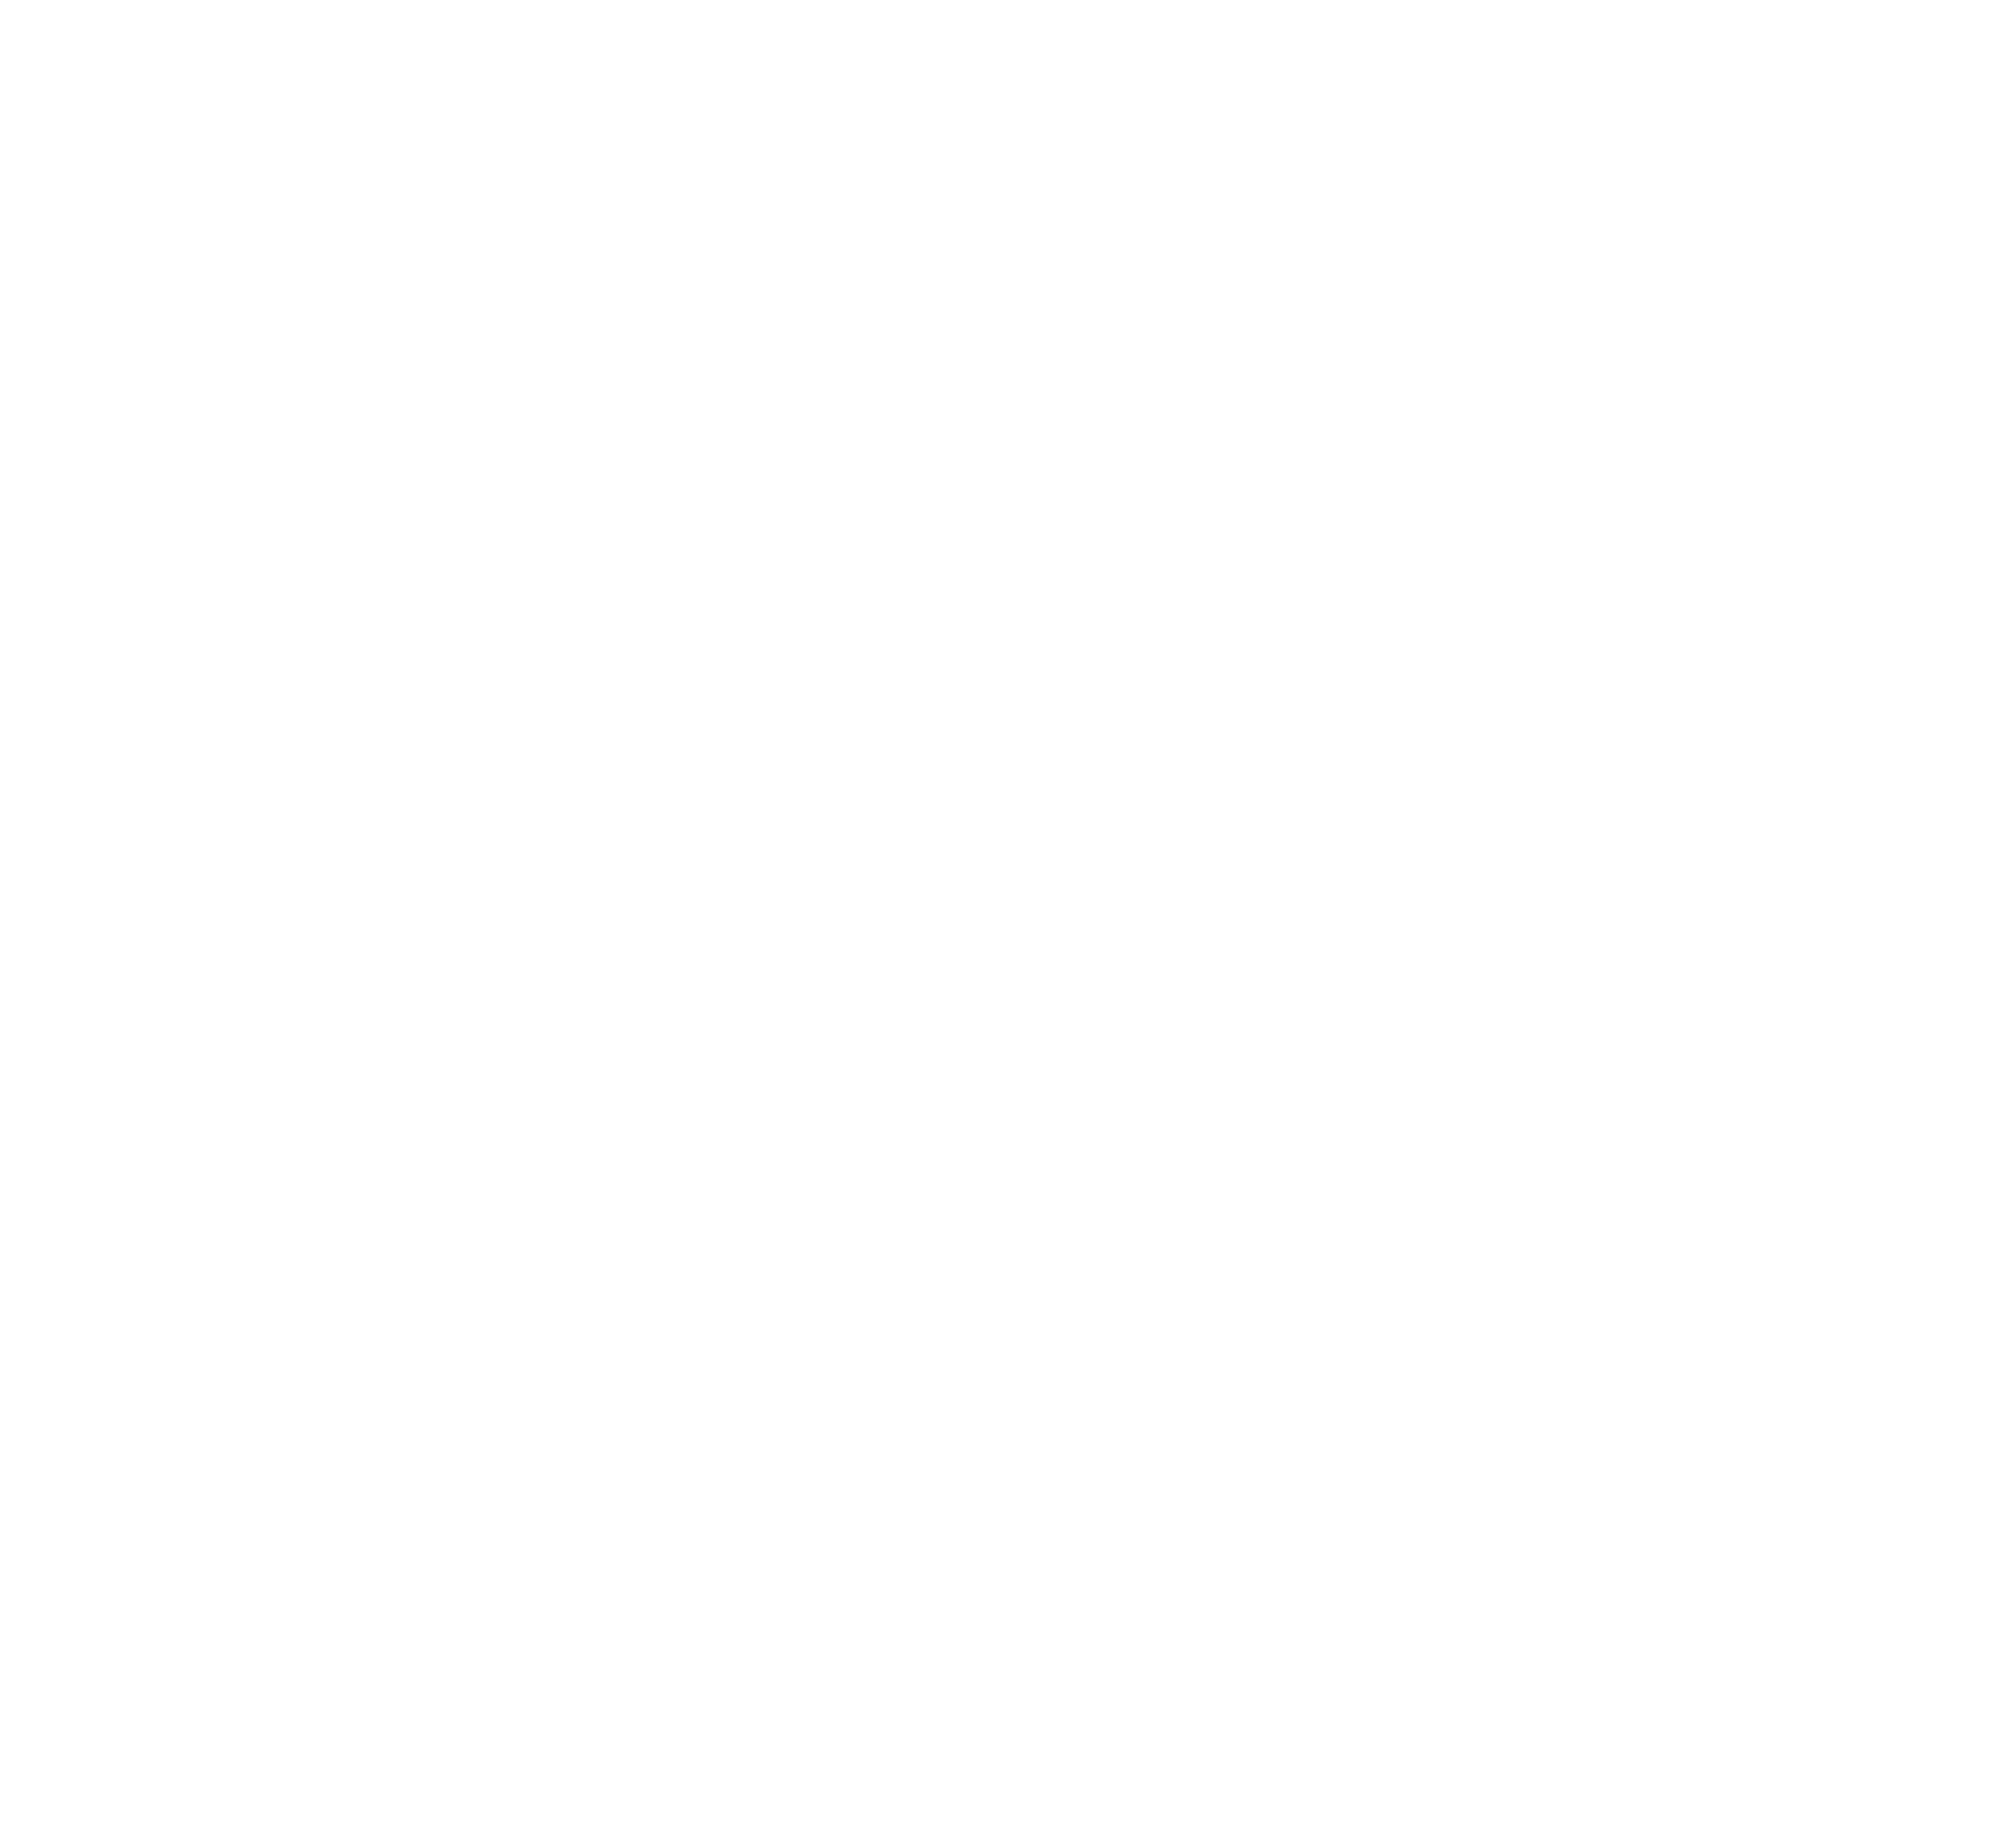 Gothenburg University and Chalmers University of Technology